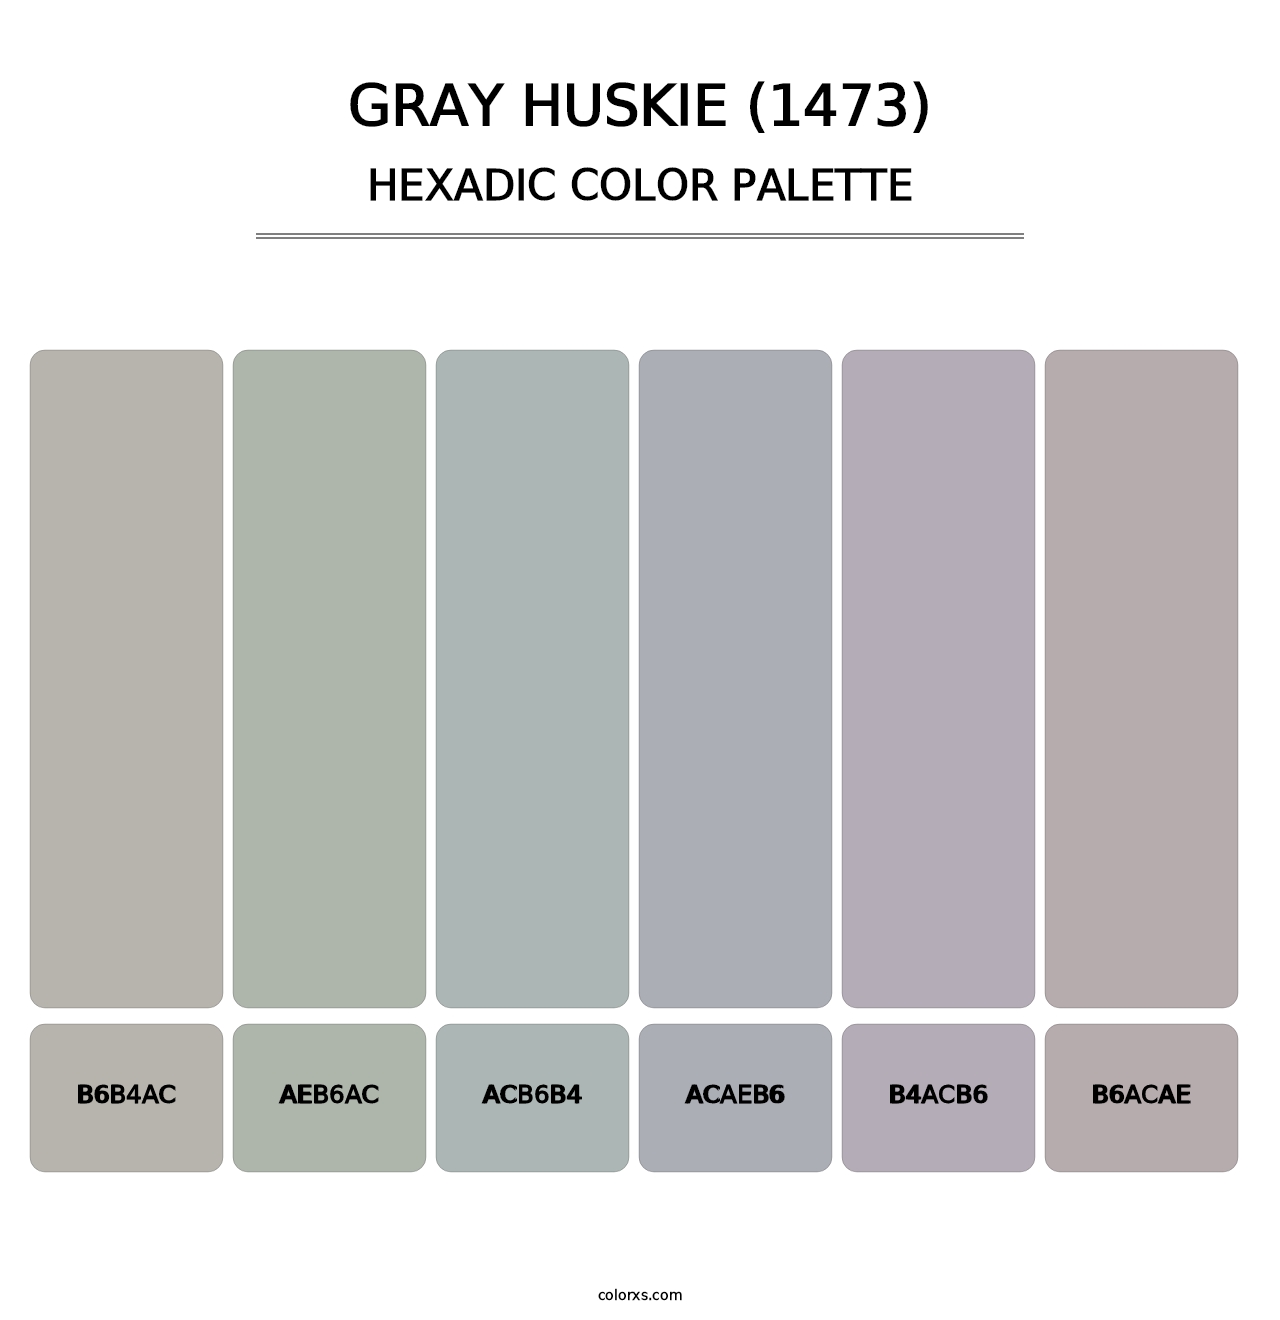 Gray Huskie (1473) - Hexadic Color Palette